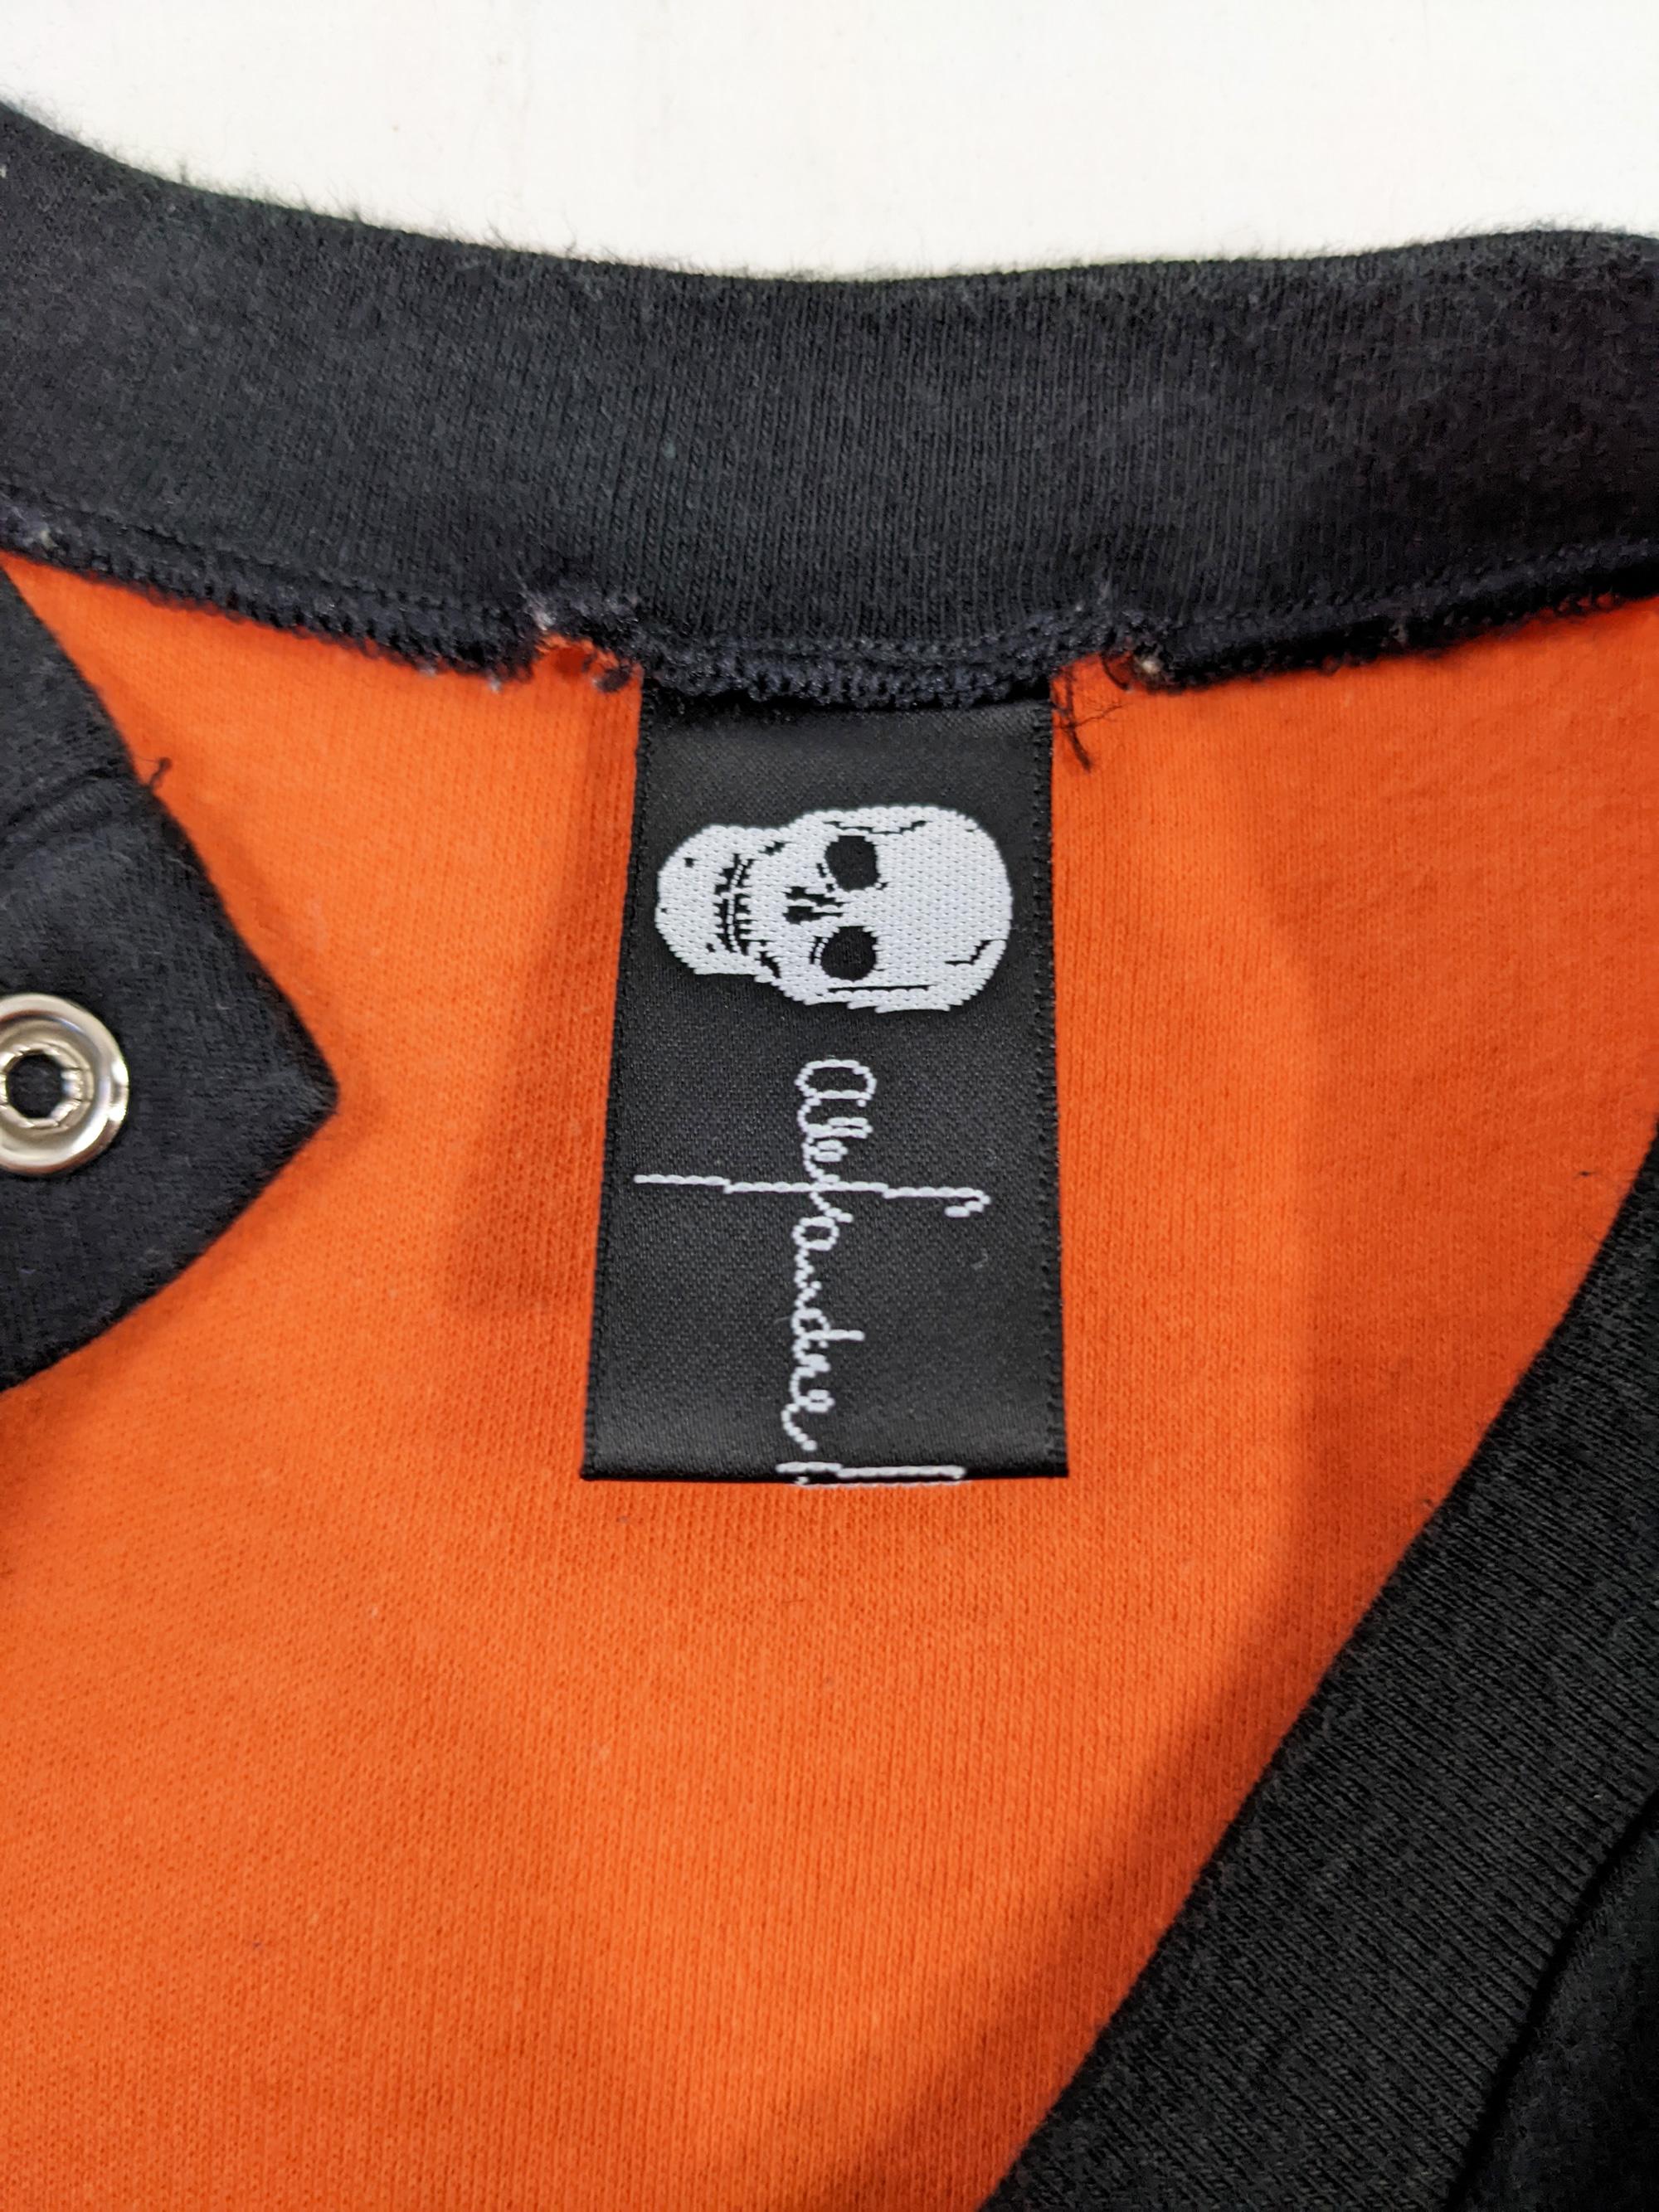 Men's Alexandre Herchcovitch Mens Vintage Sleeveless Black & Orange T Shirt, 2000s